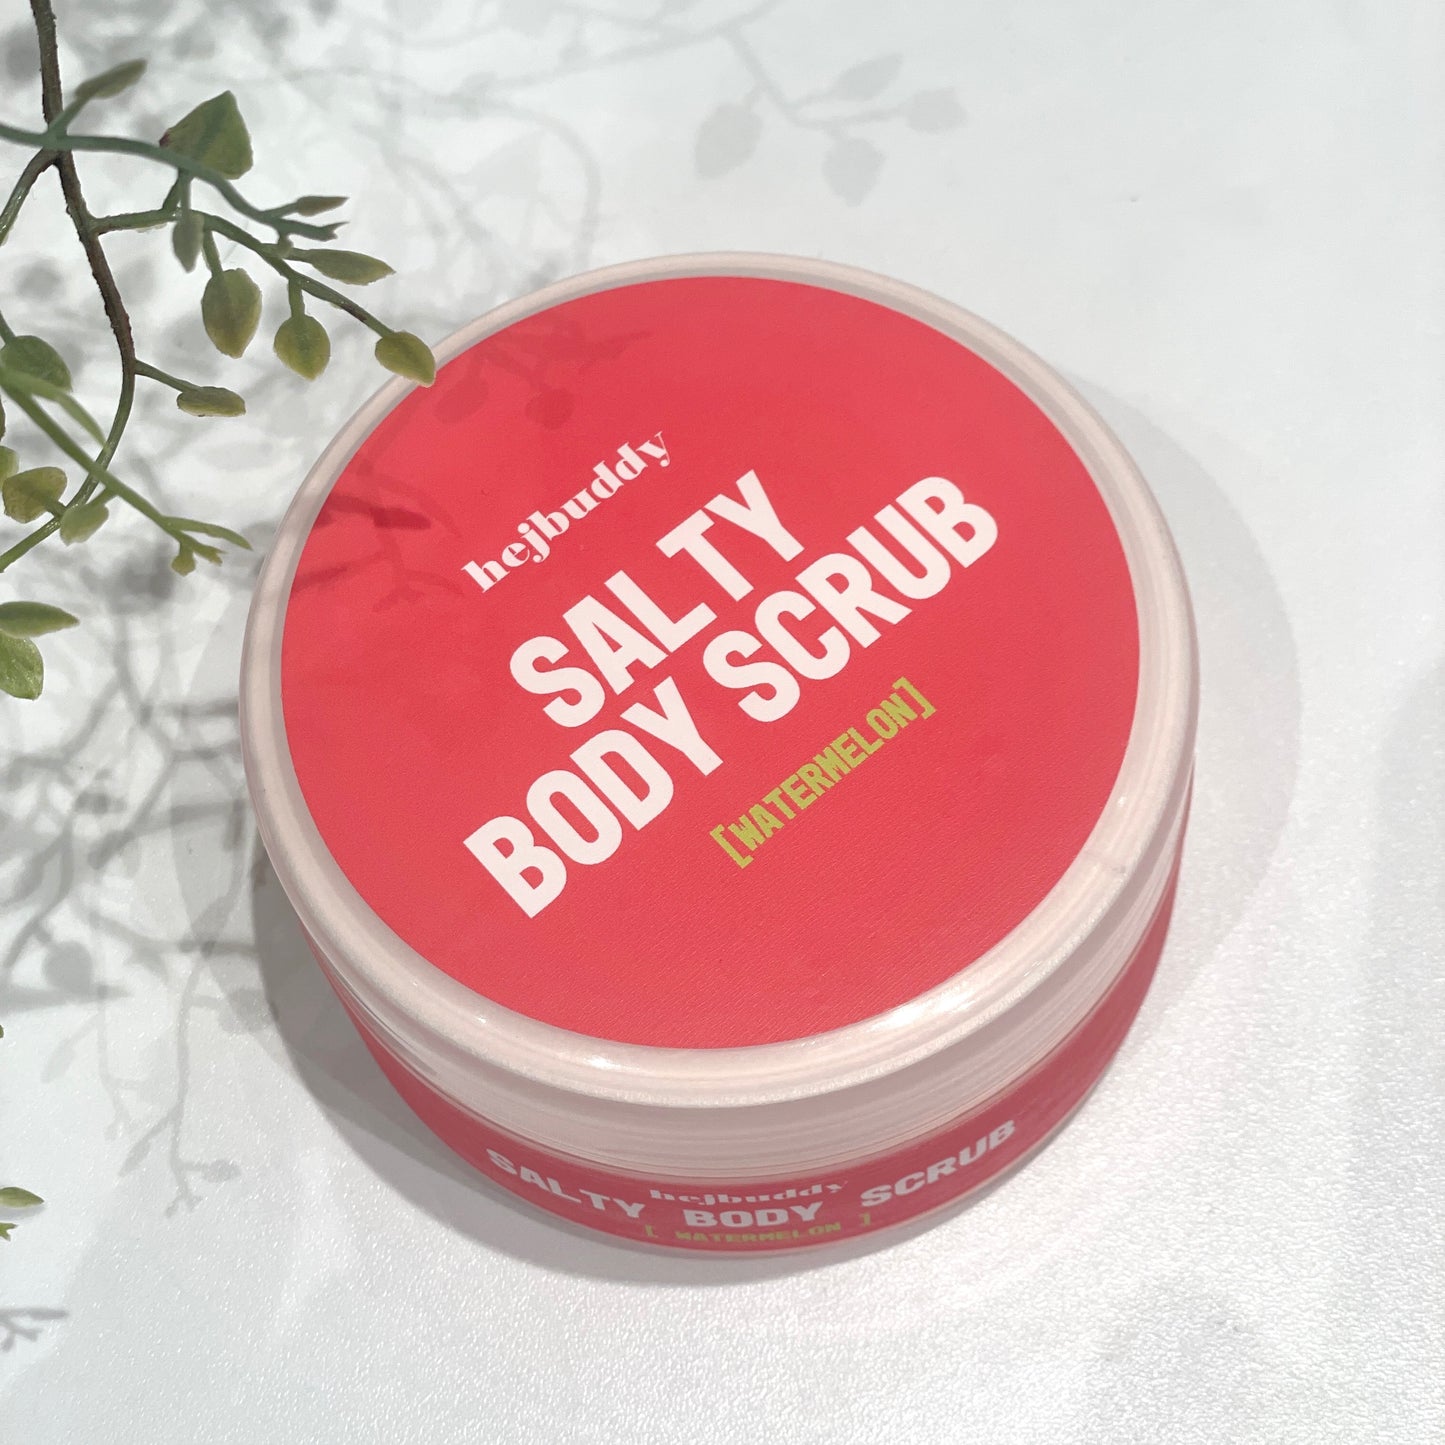 Salty Body Scrub [Watermelon] - salt scrub for the body